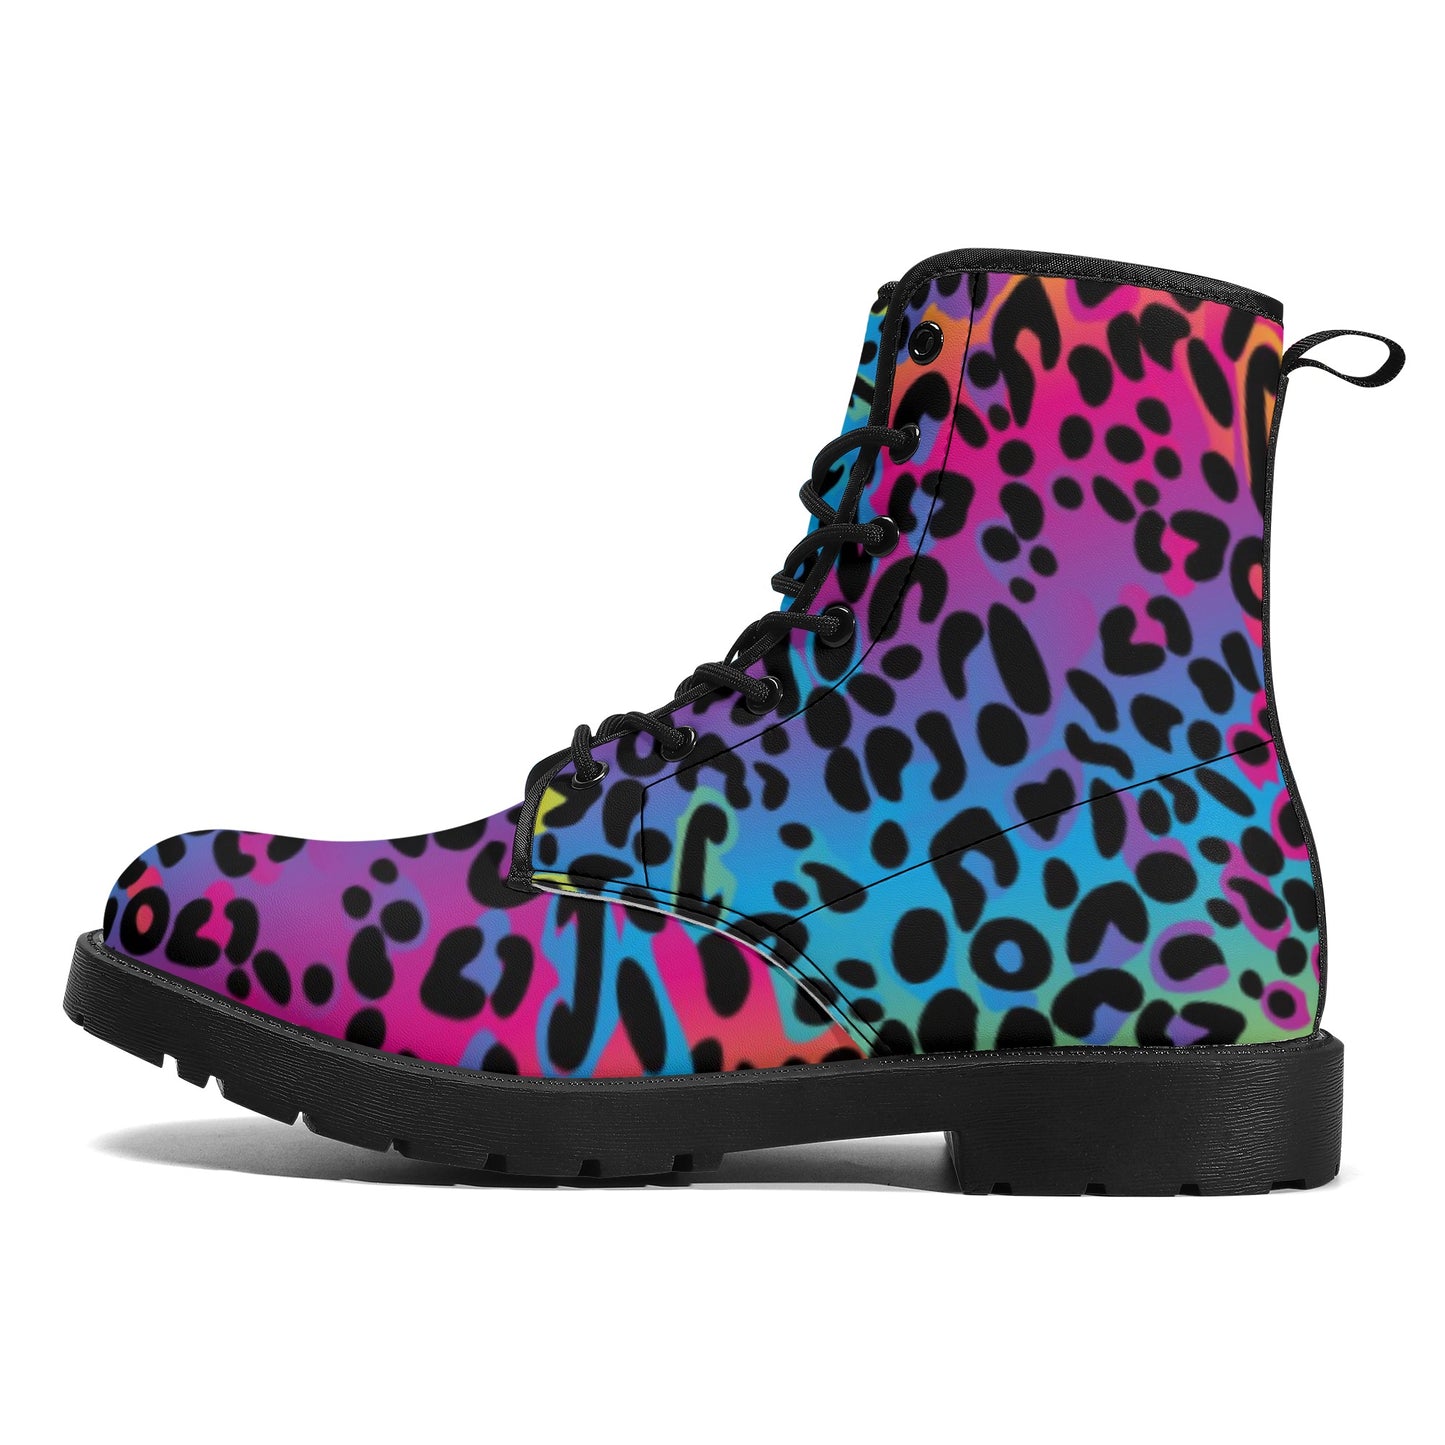 Rainbow Leopard Boot for Stanley,simplemodern,brumate,owala,yeti